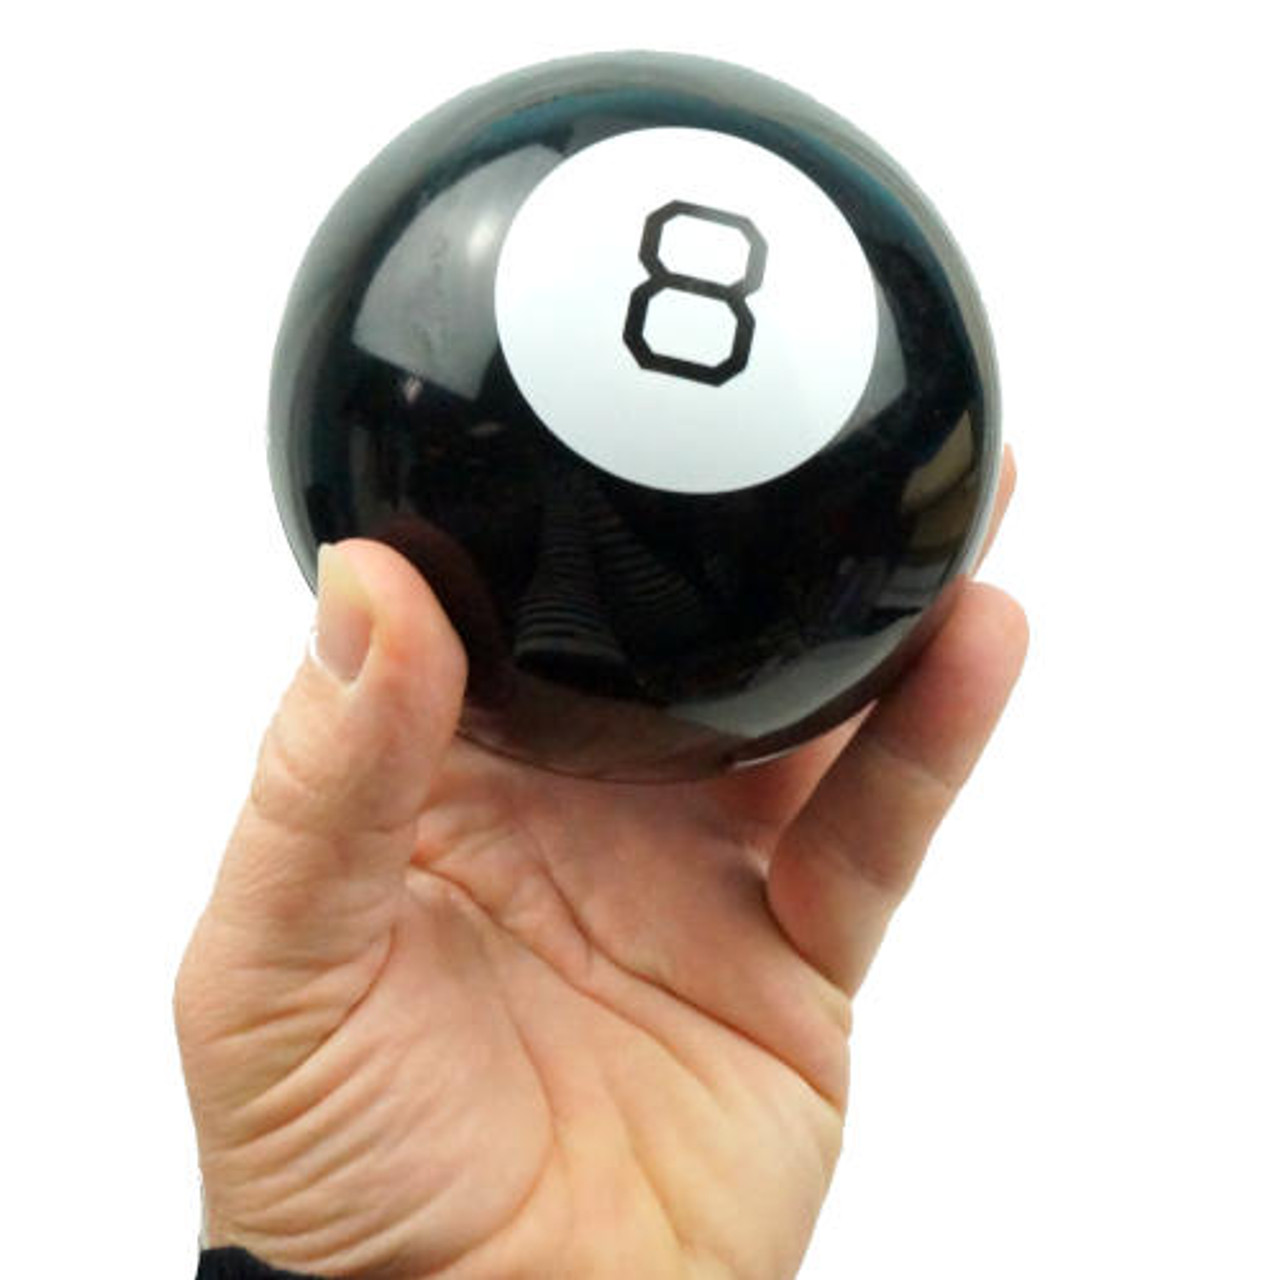 Magic 8 Ball - Ball Marker